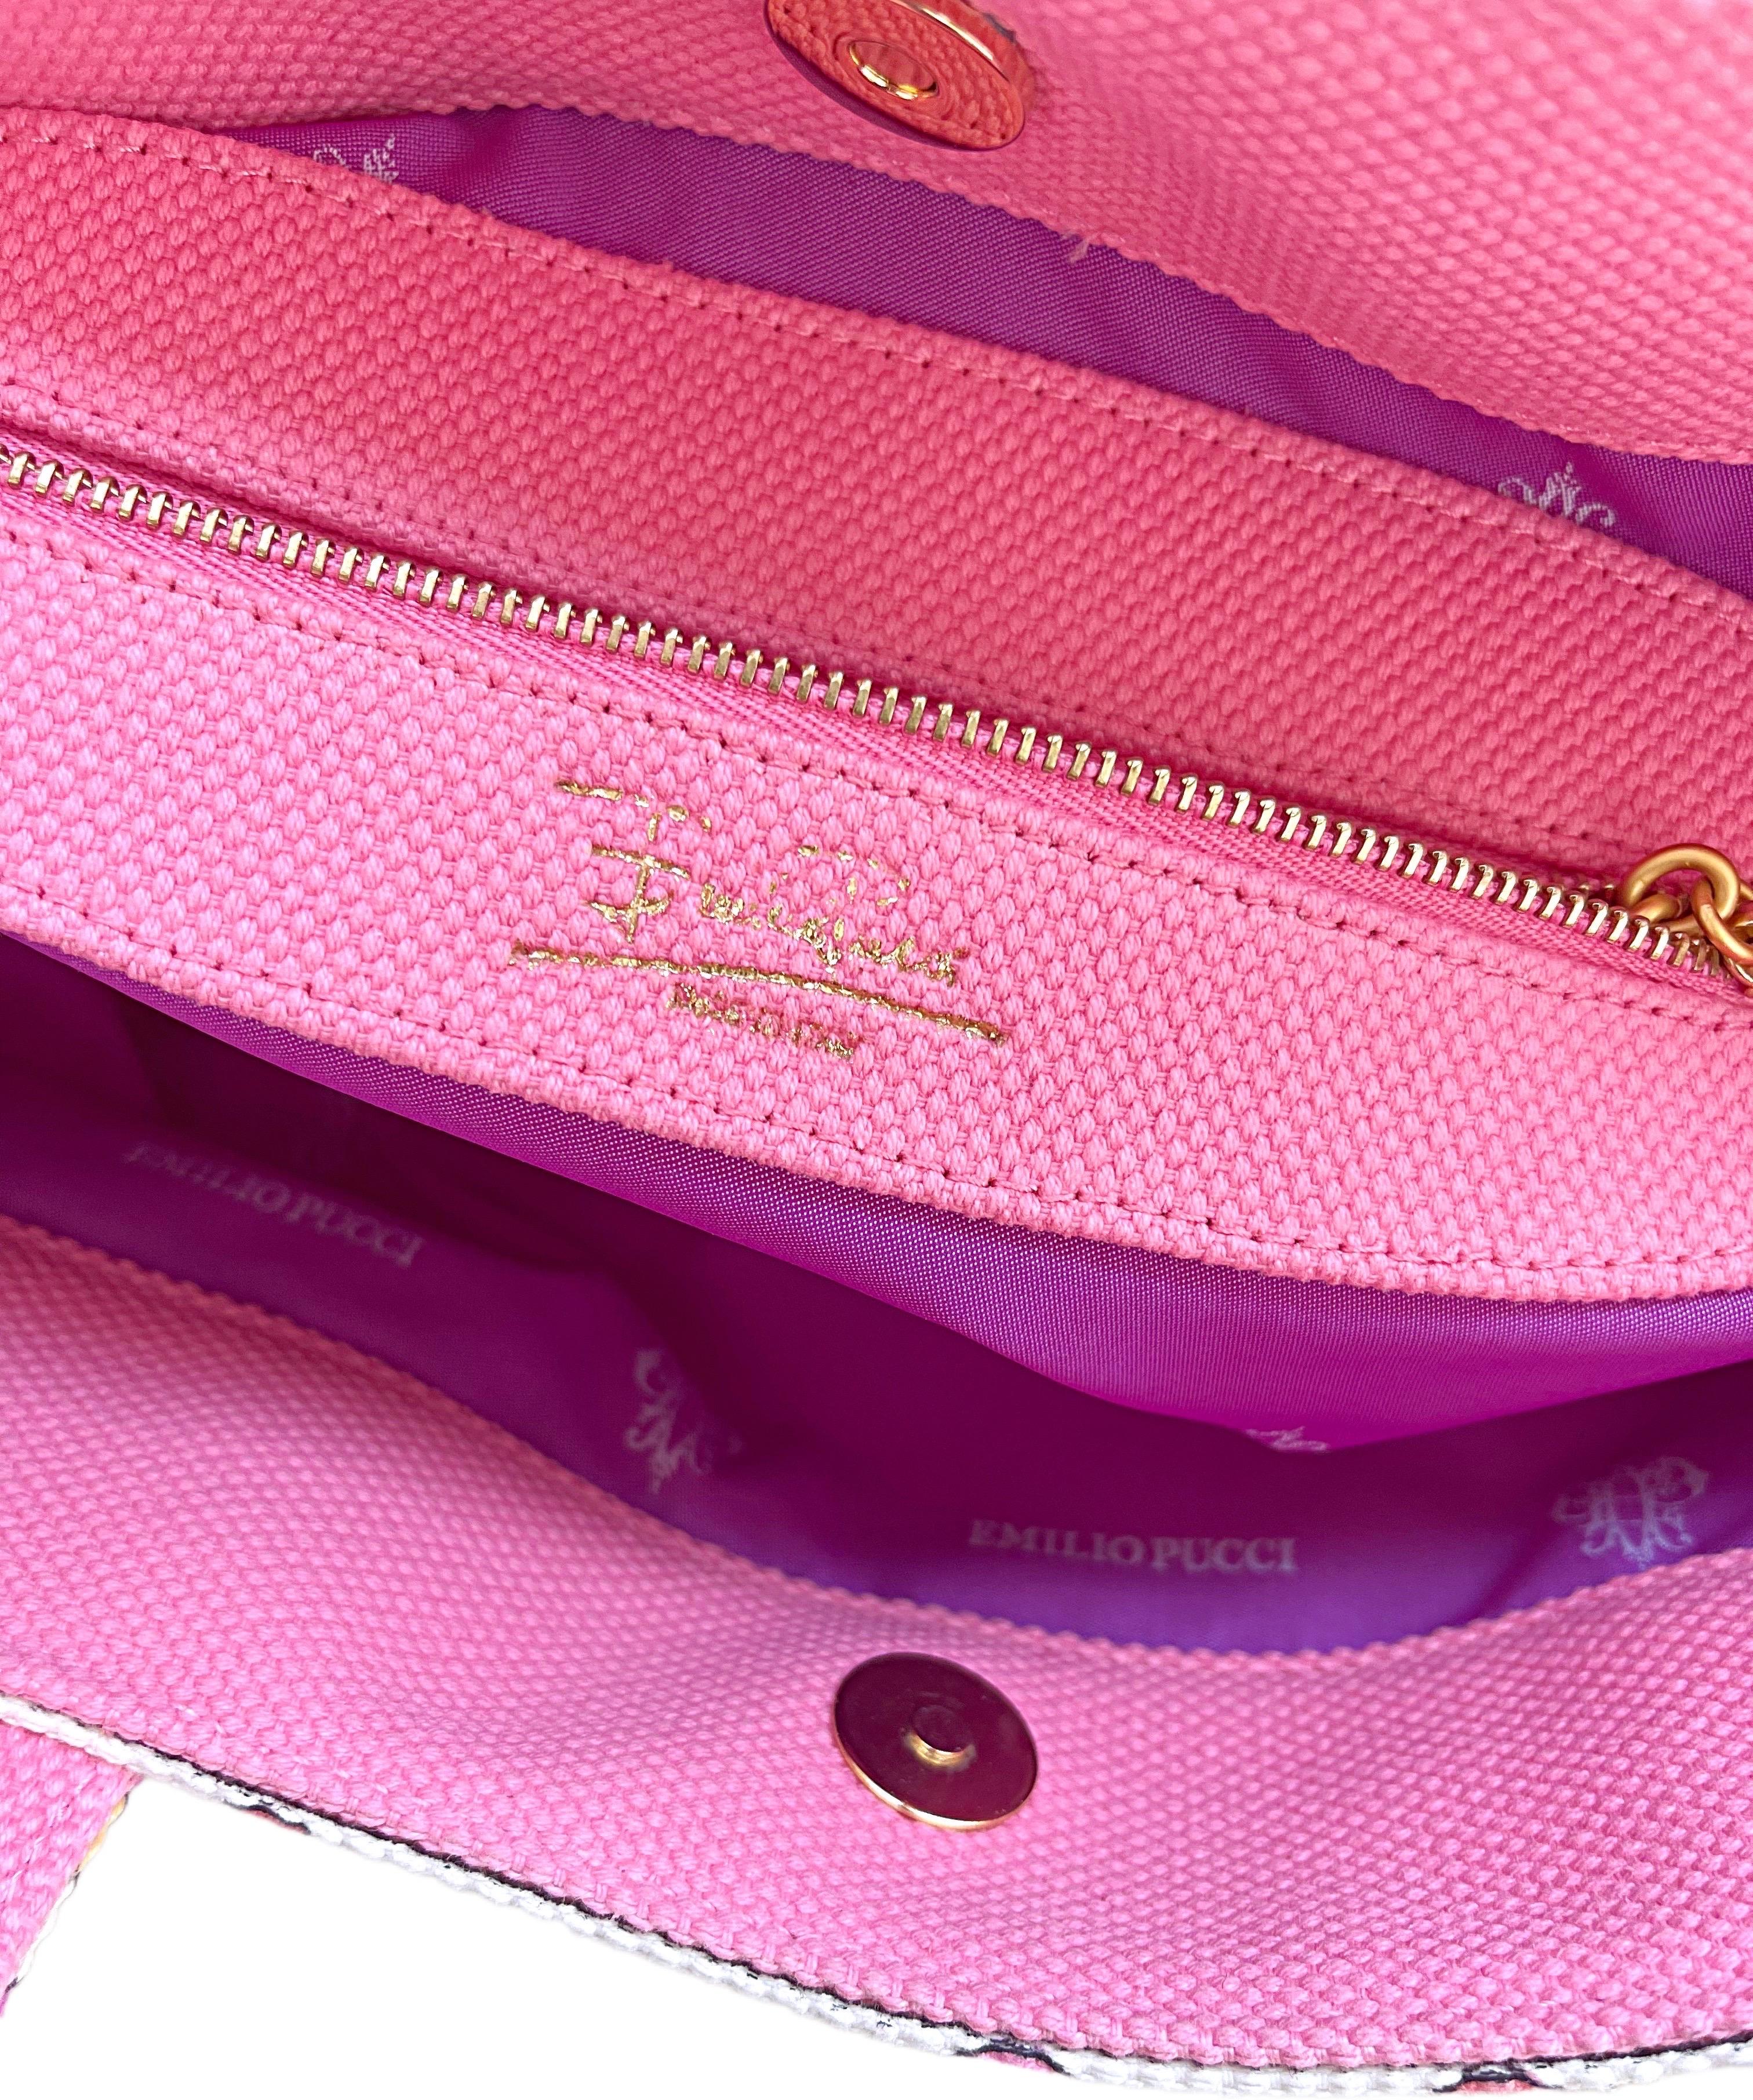 NWT Emilio Pucci 2000s Bubblegum Pink Kaleidoscope Mosaic Satchel Handbag Purse For Sale 2